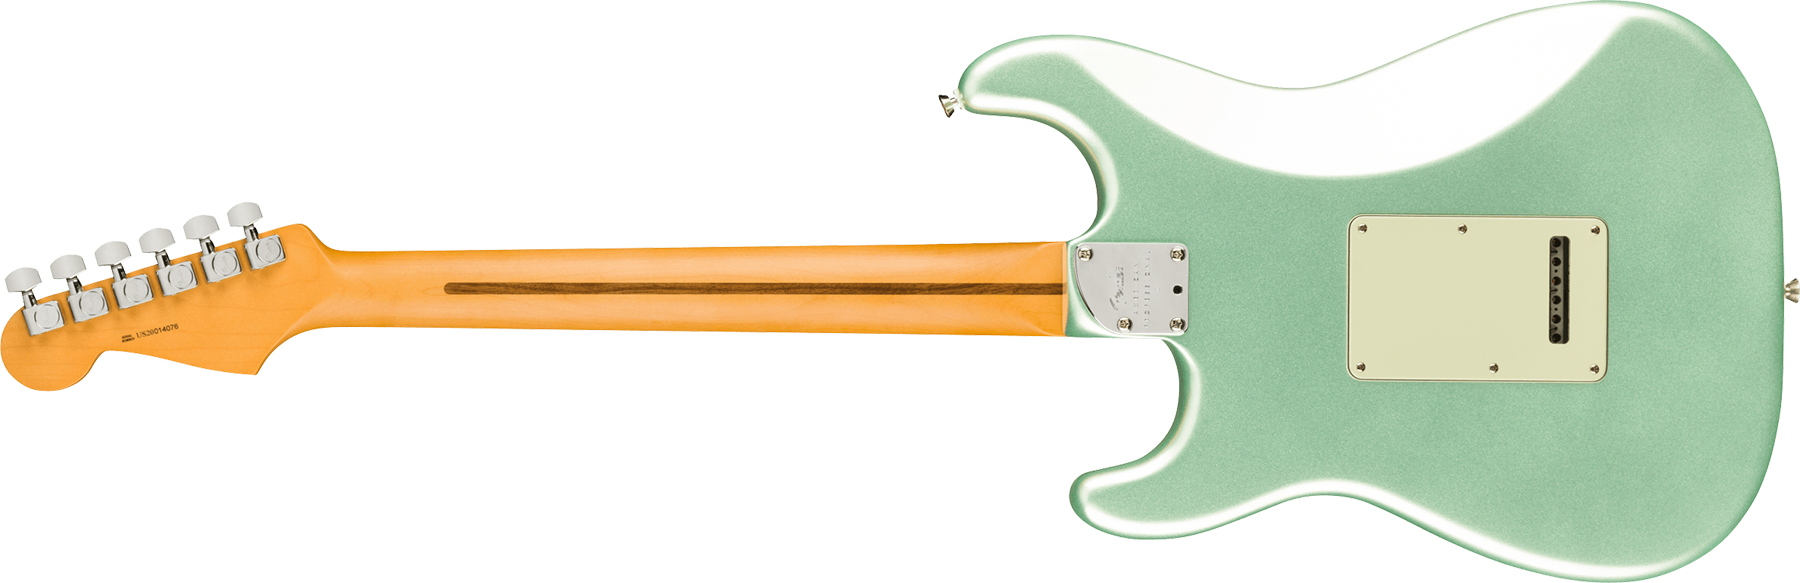 Fender Strat American Professional Ii Lh Gaucher Usa Mn - Mystic Surf Green - Left-handed electric guitar - Variation 1